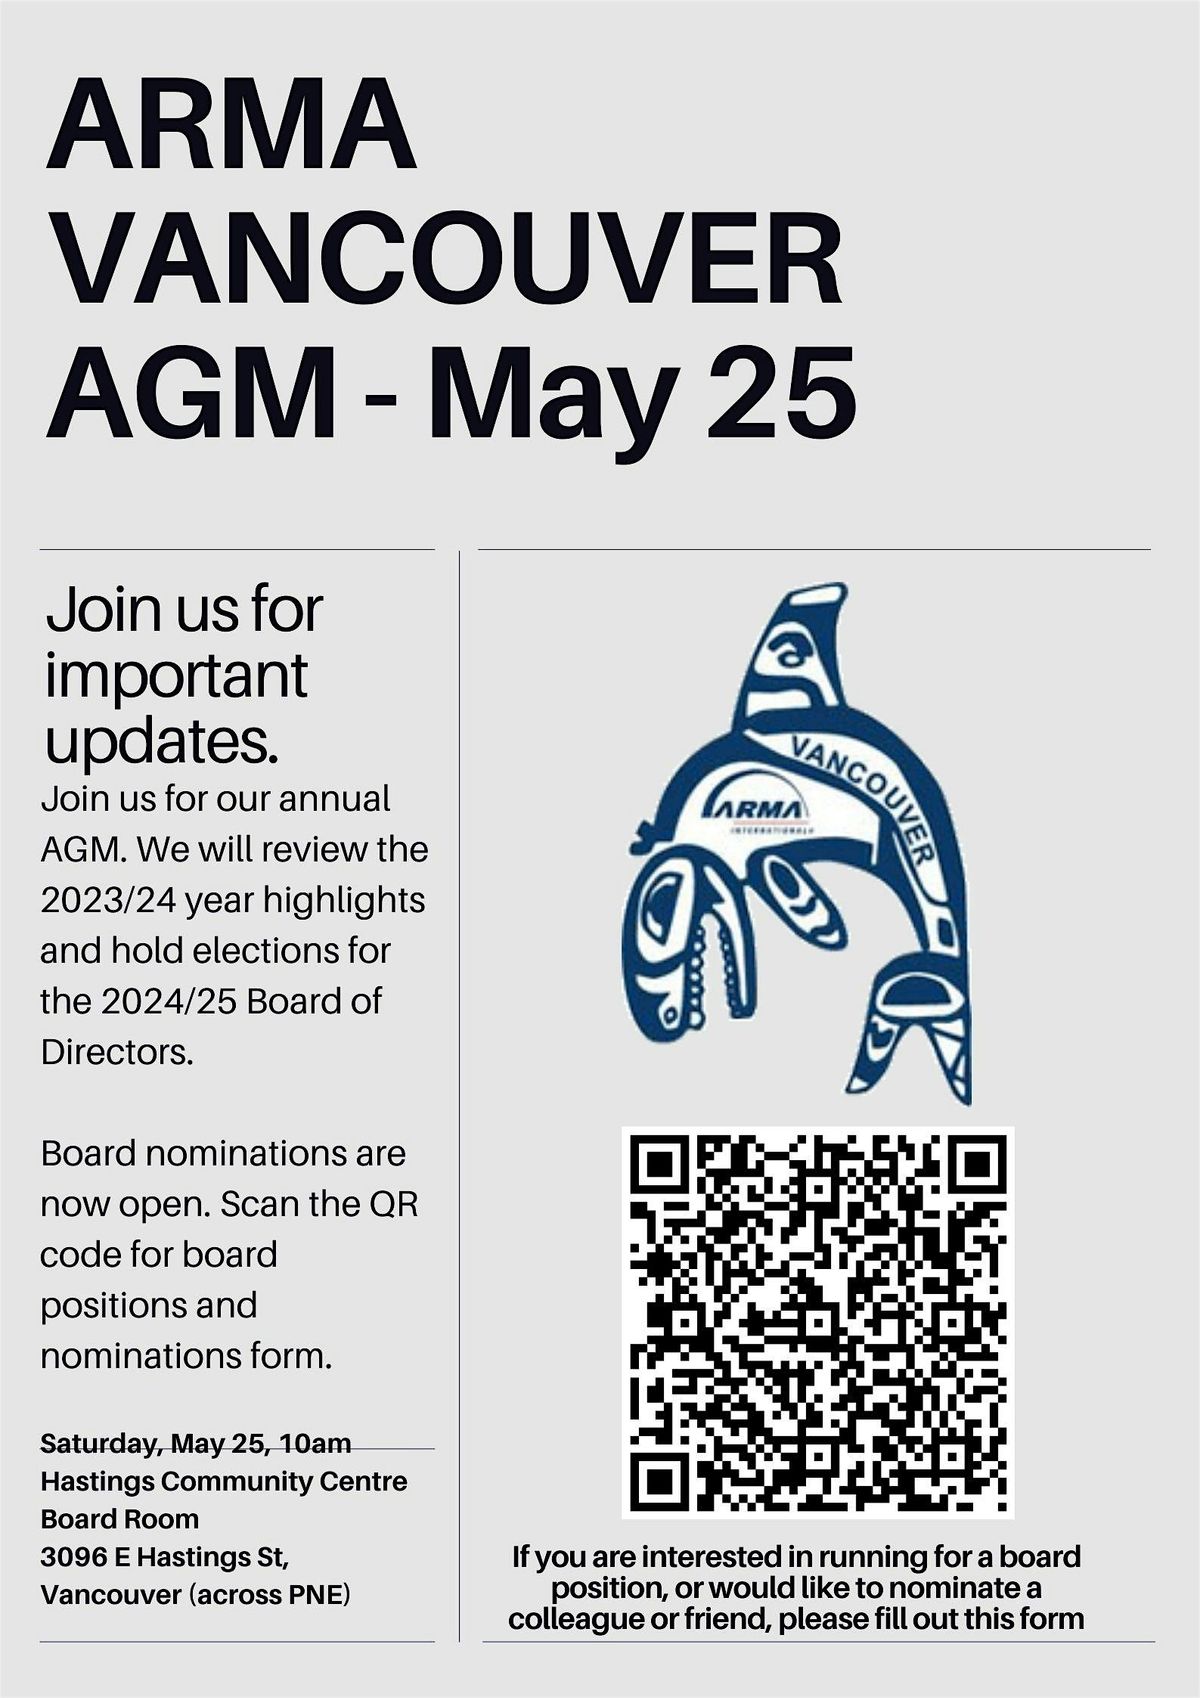 ARMA Vancouver Annual General Meeting (AGM)